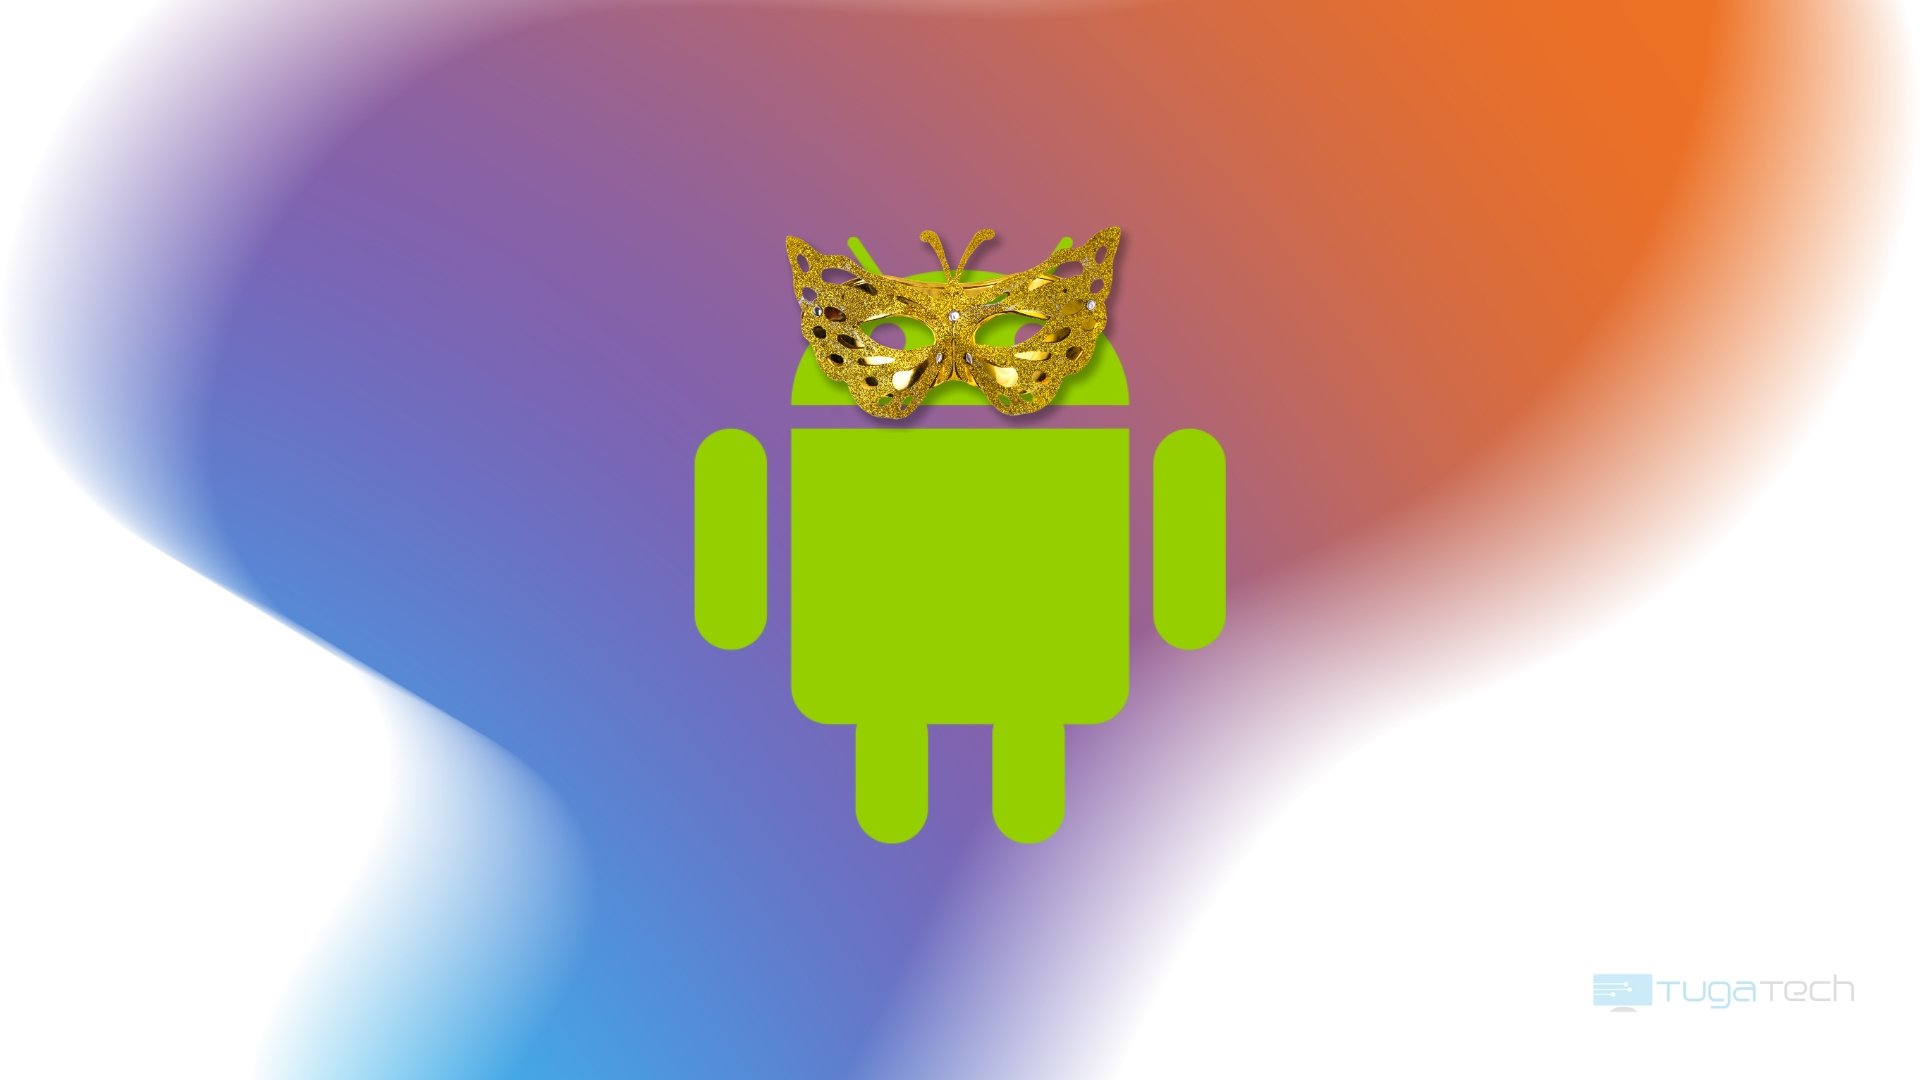 Android escondido com máscara